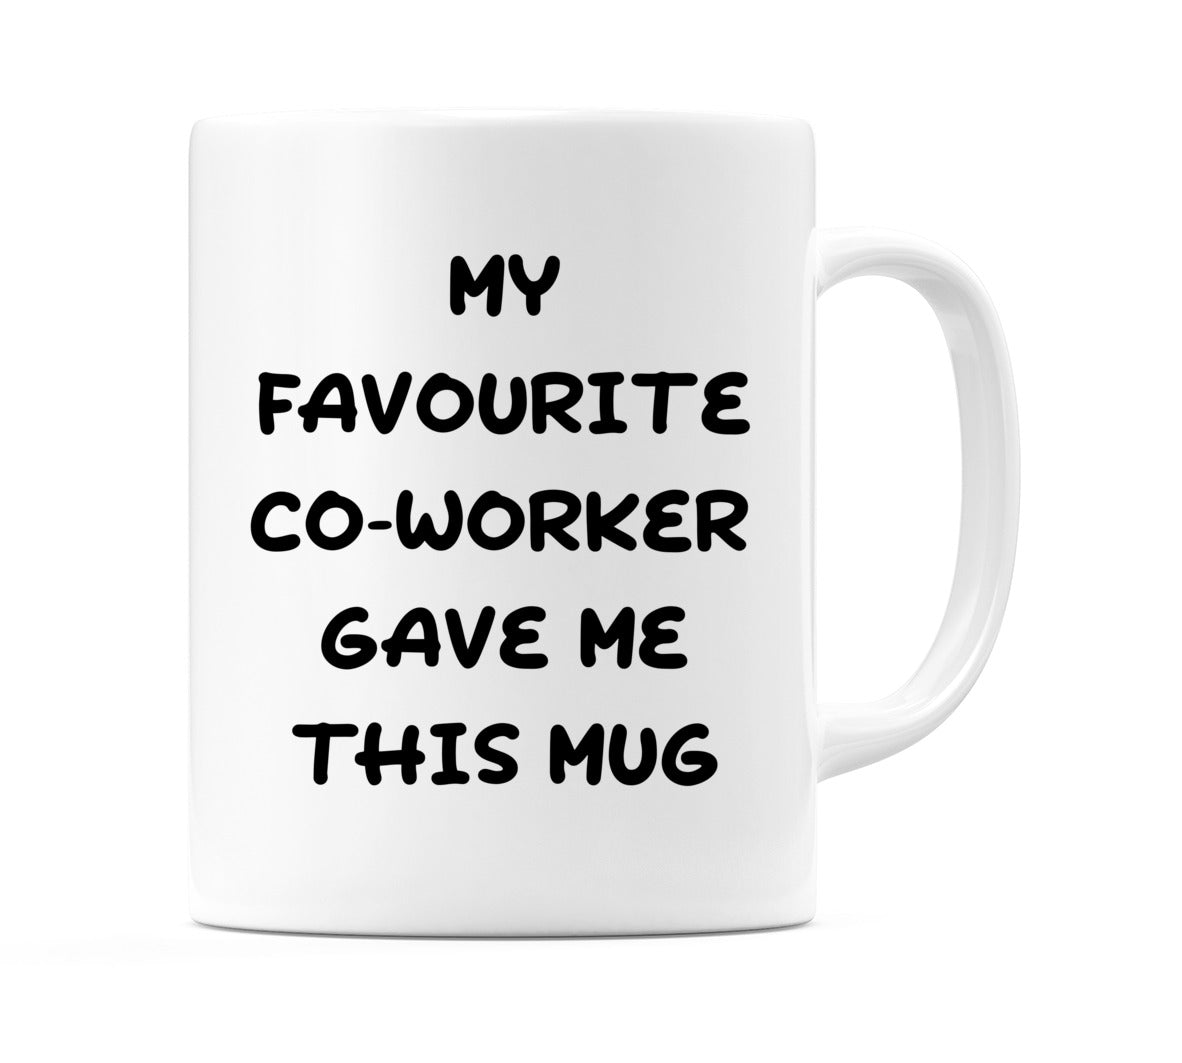 My favourite co-worker gave me this mug Mug